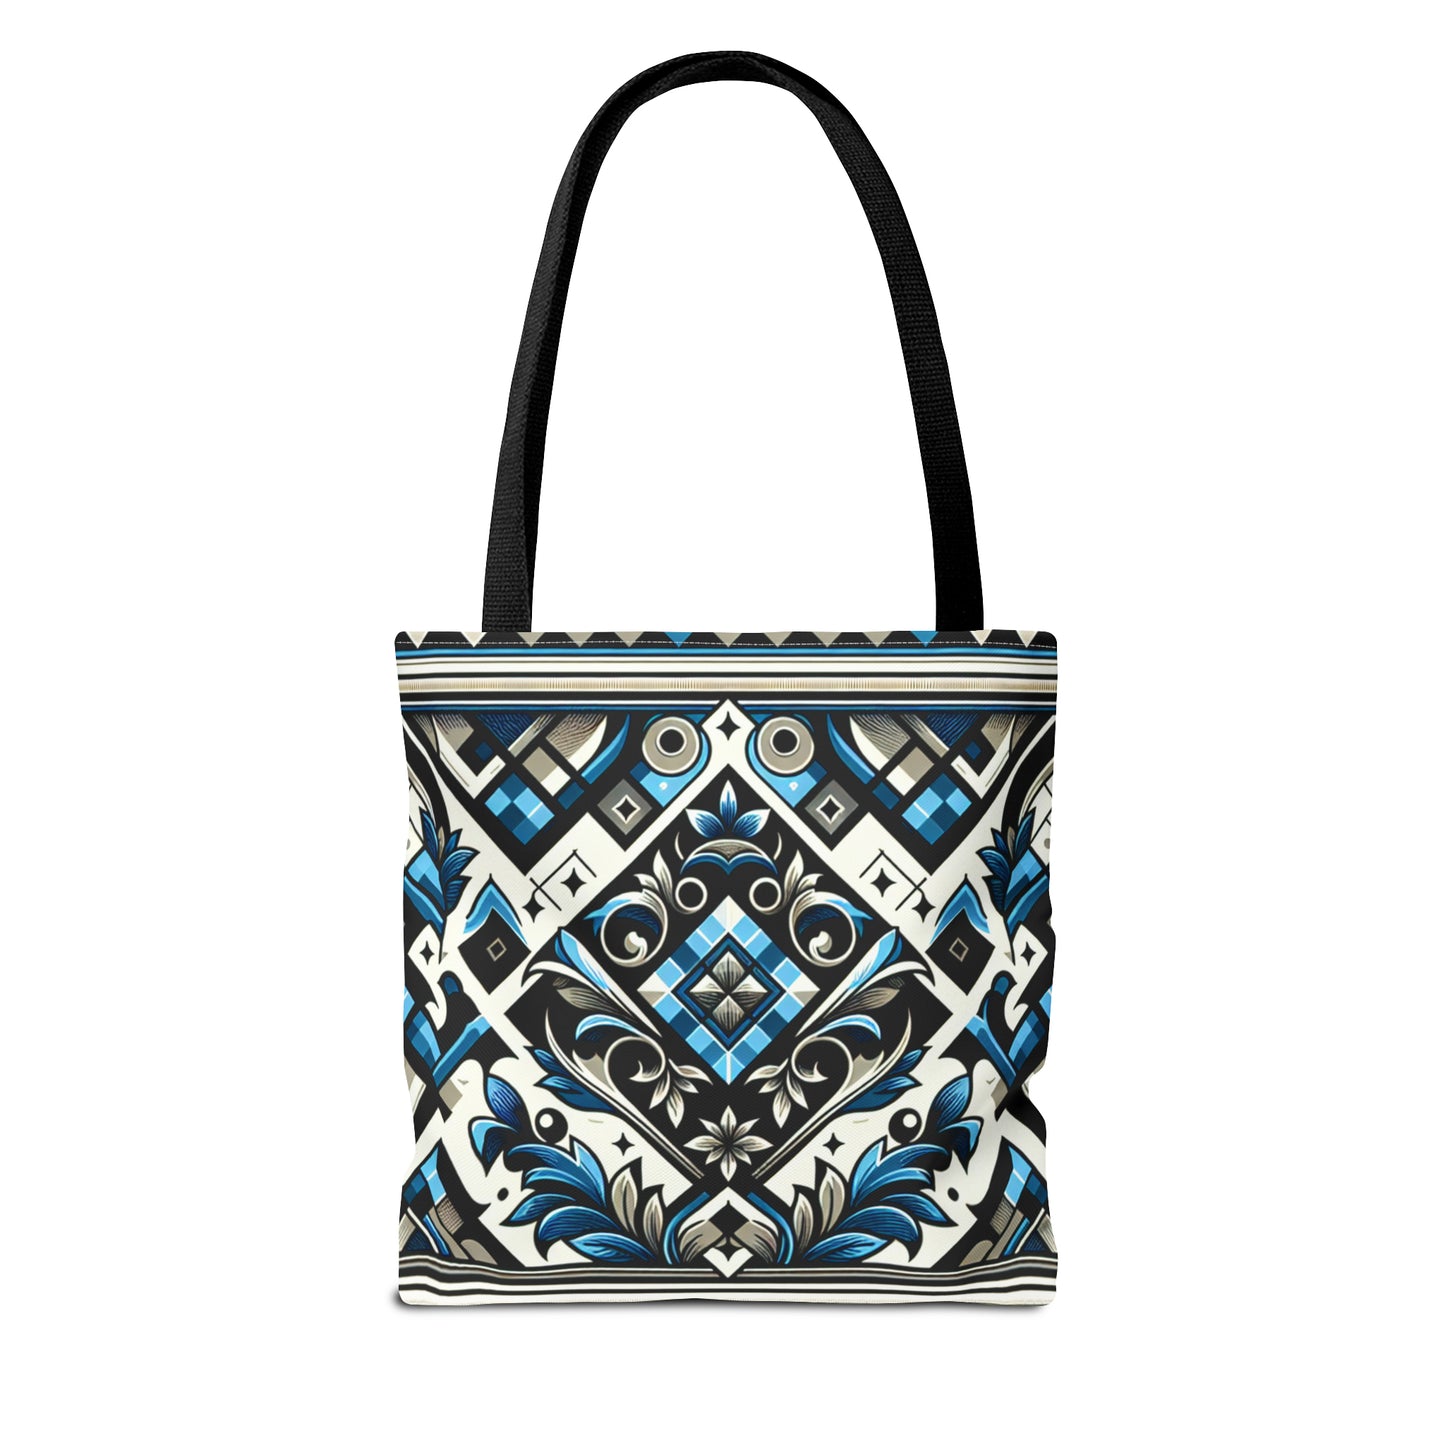 Aztec-Inspired Tote Bag